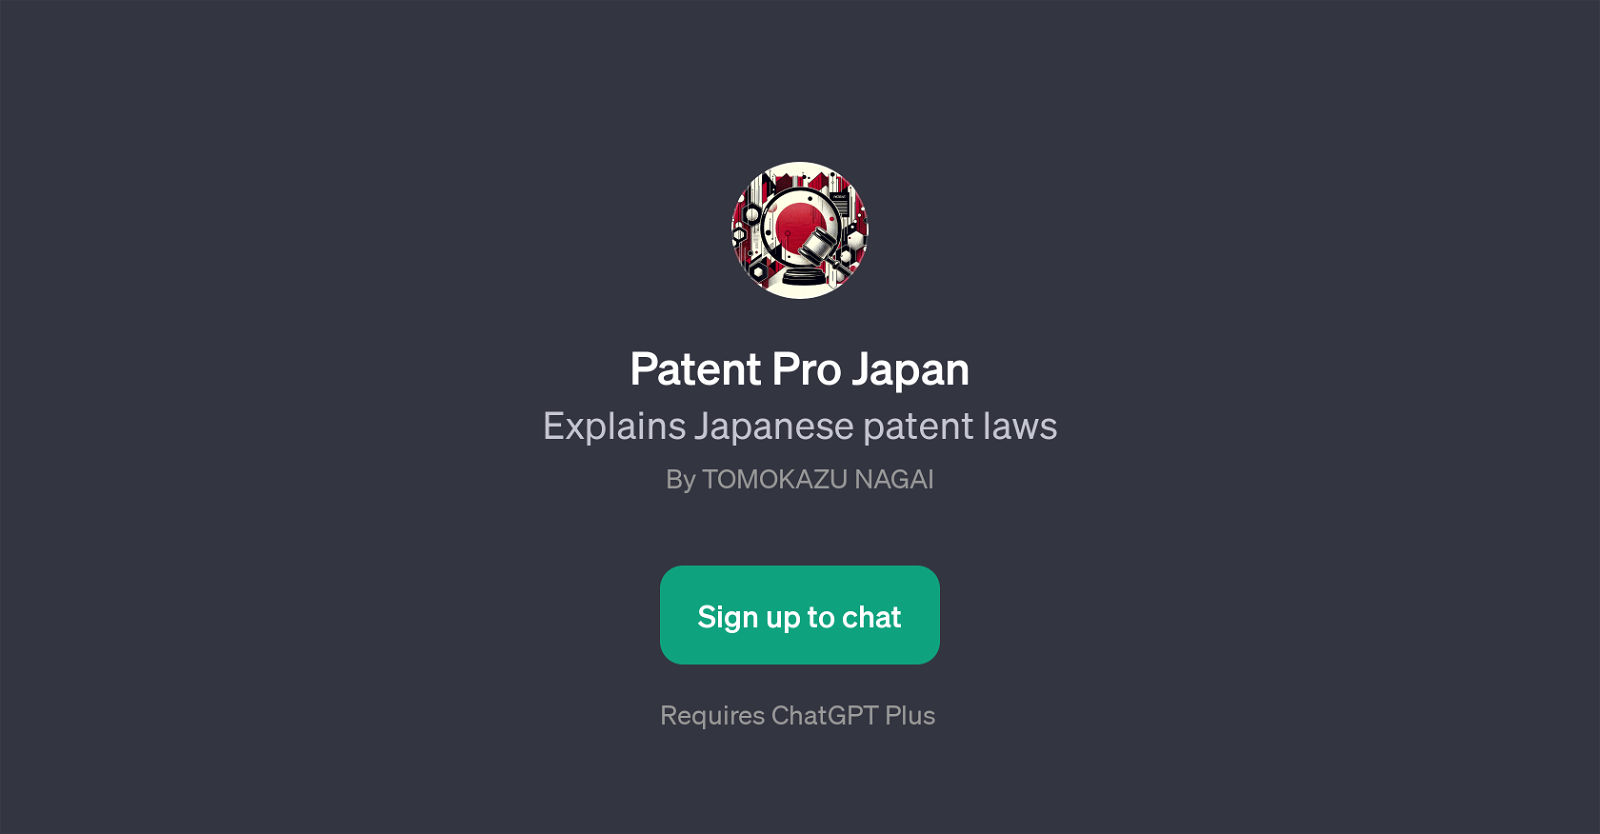 Patent Pro Japan website